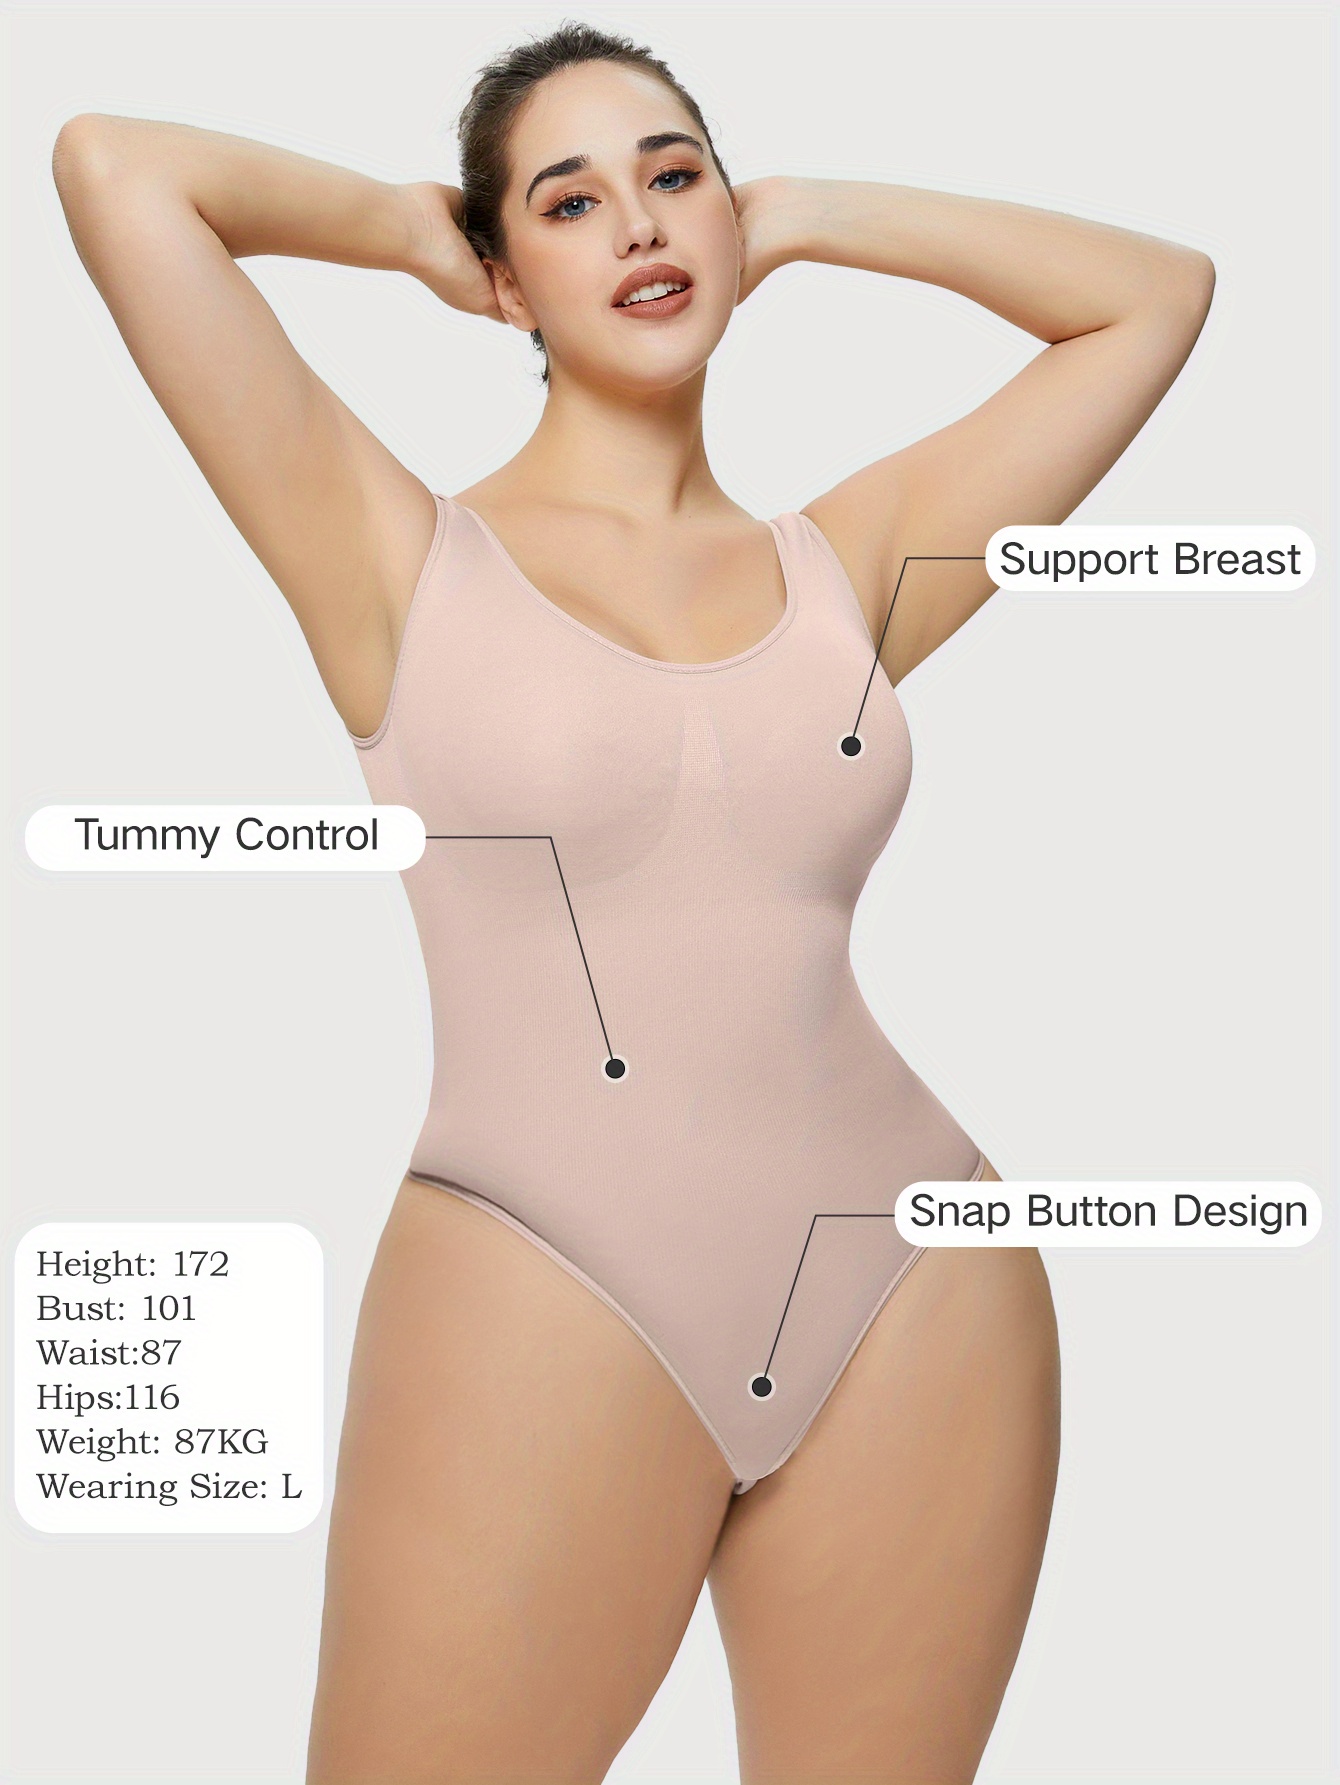 Aueoeo Plus Size Shapewear for Women Tummy Control, Waist Control